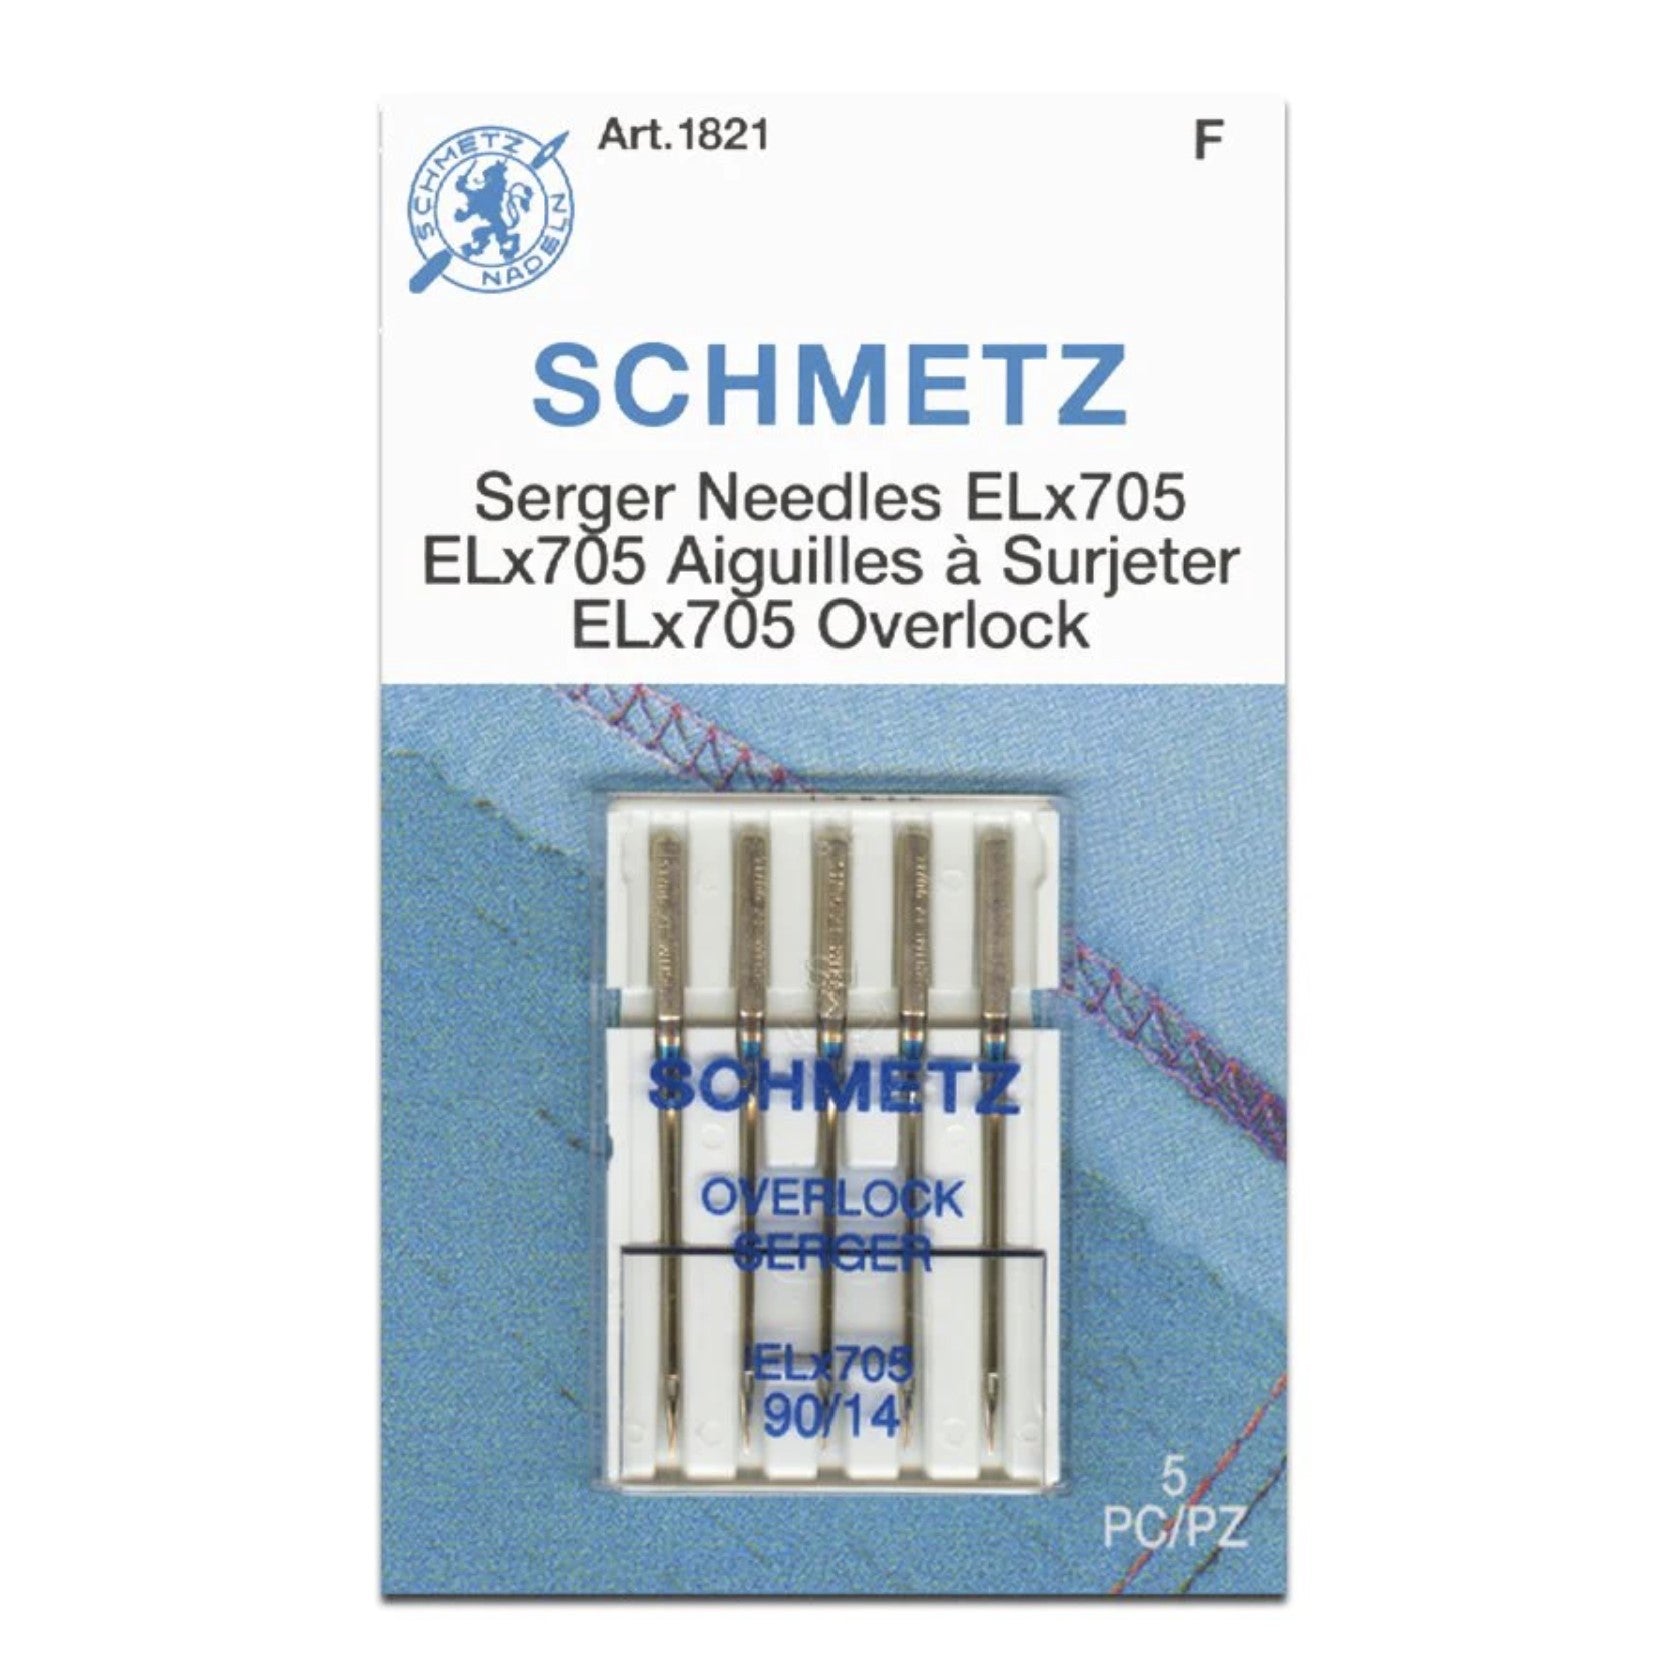 Serger / Overlock -- Machine Needles (ELx705), Various Sizes by Schmetz®